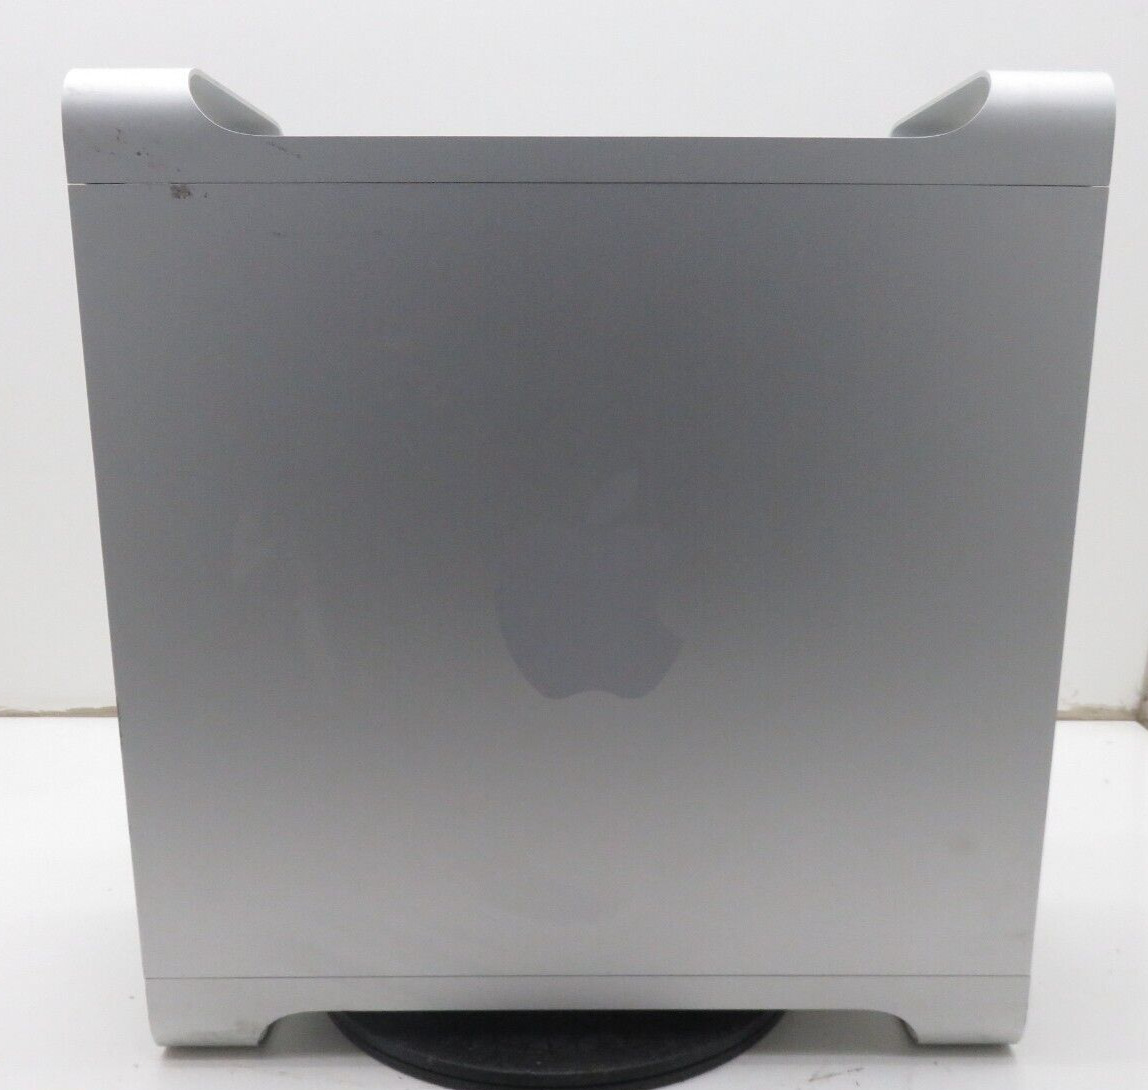 Apple Mac Pro 5,1 A1289 2010 2x Xeon 4 Core 16GB Ram 1.5TB HDD OSX 10.8 HD 5870